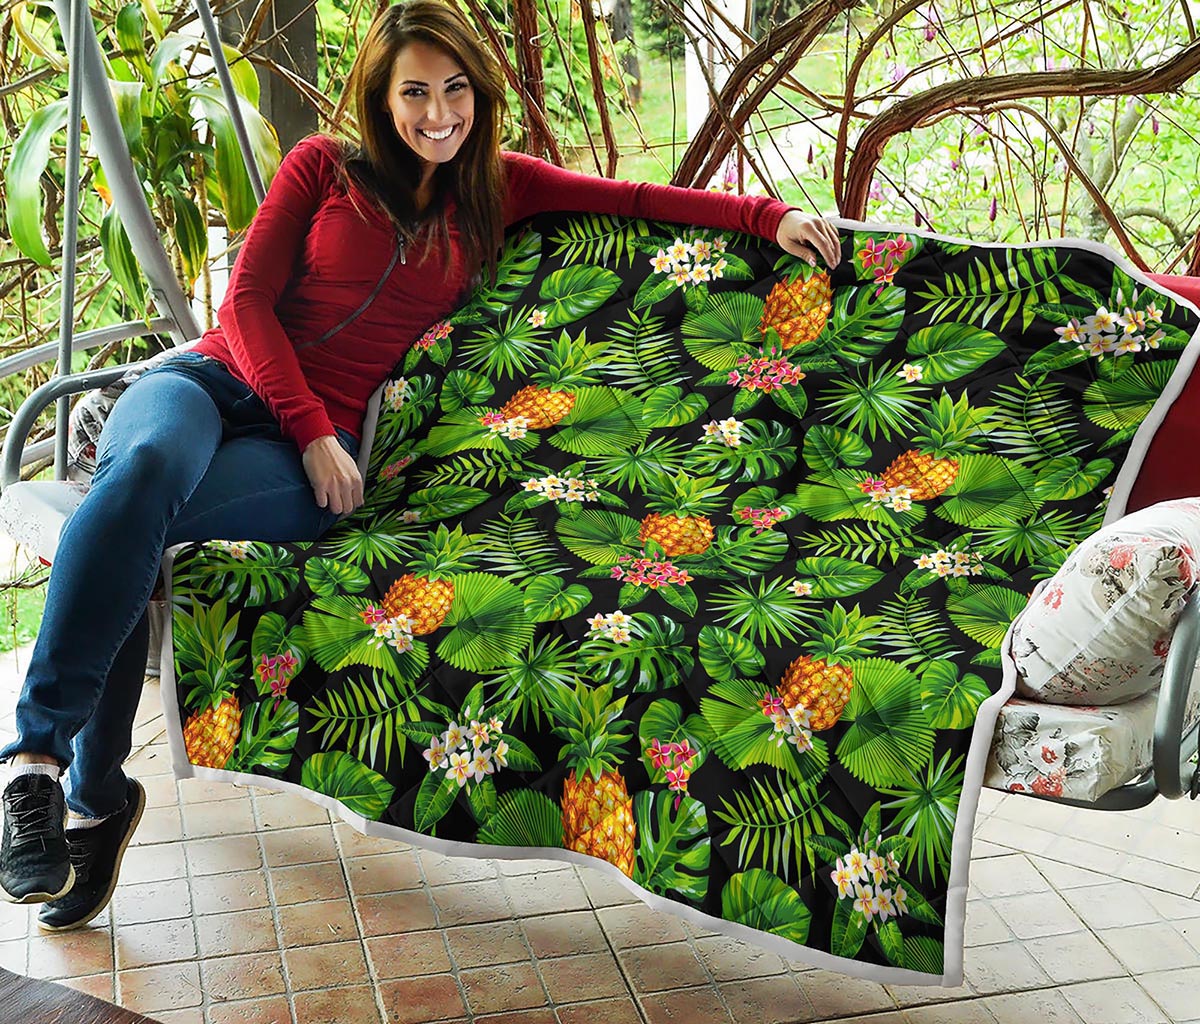 Black Hawaiian Pineapple Pattern Print Quilt